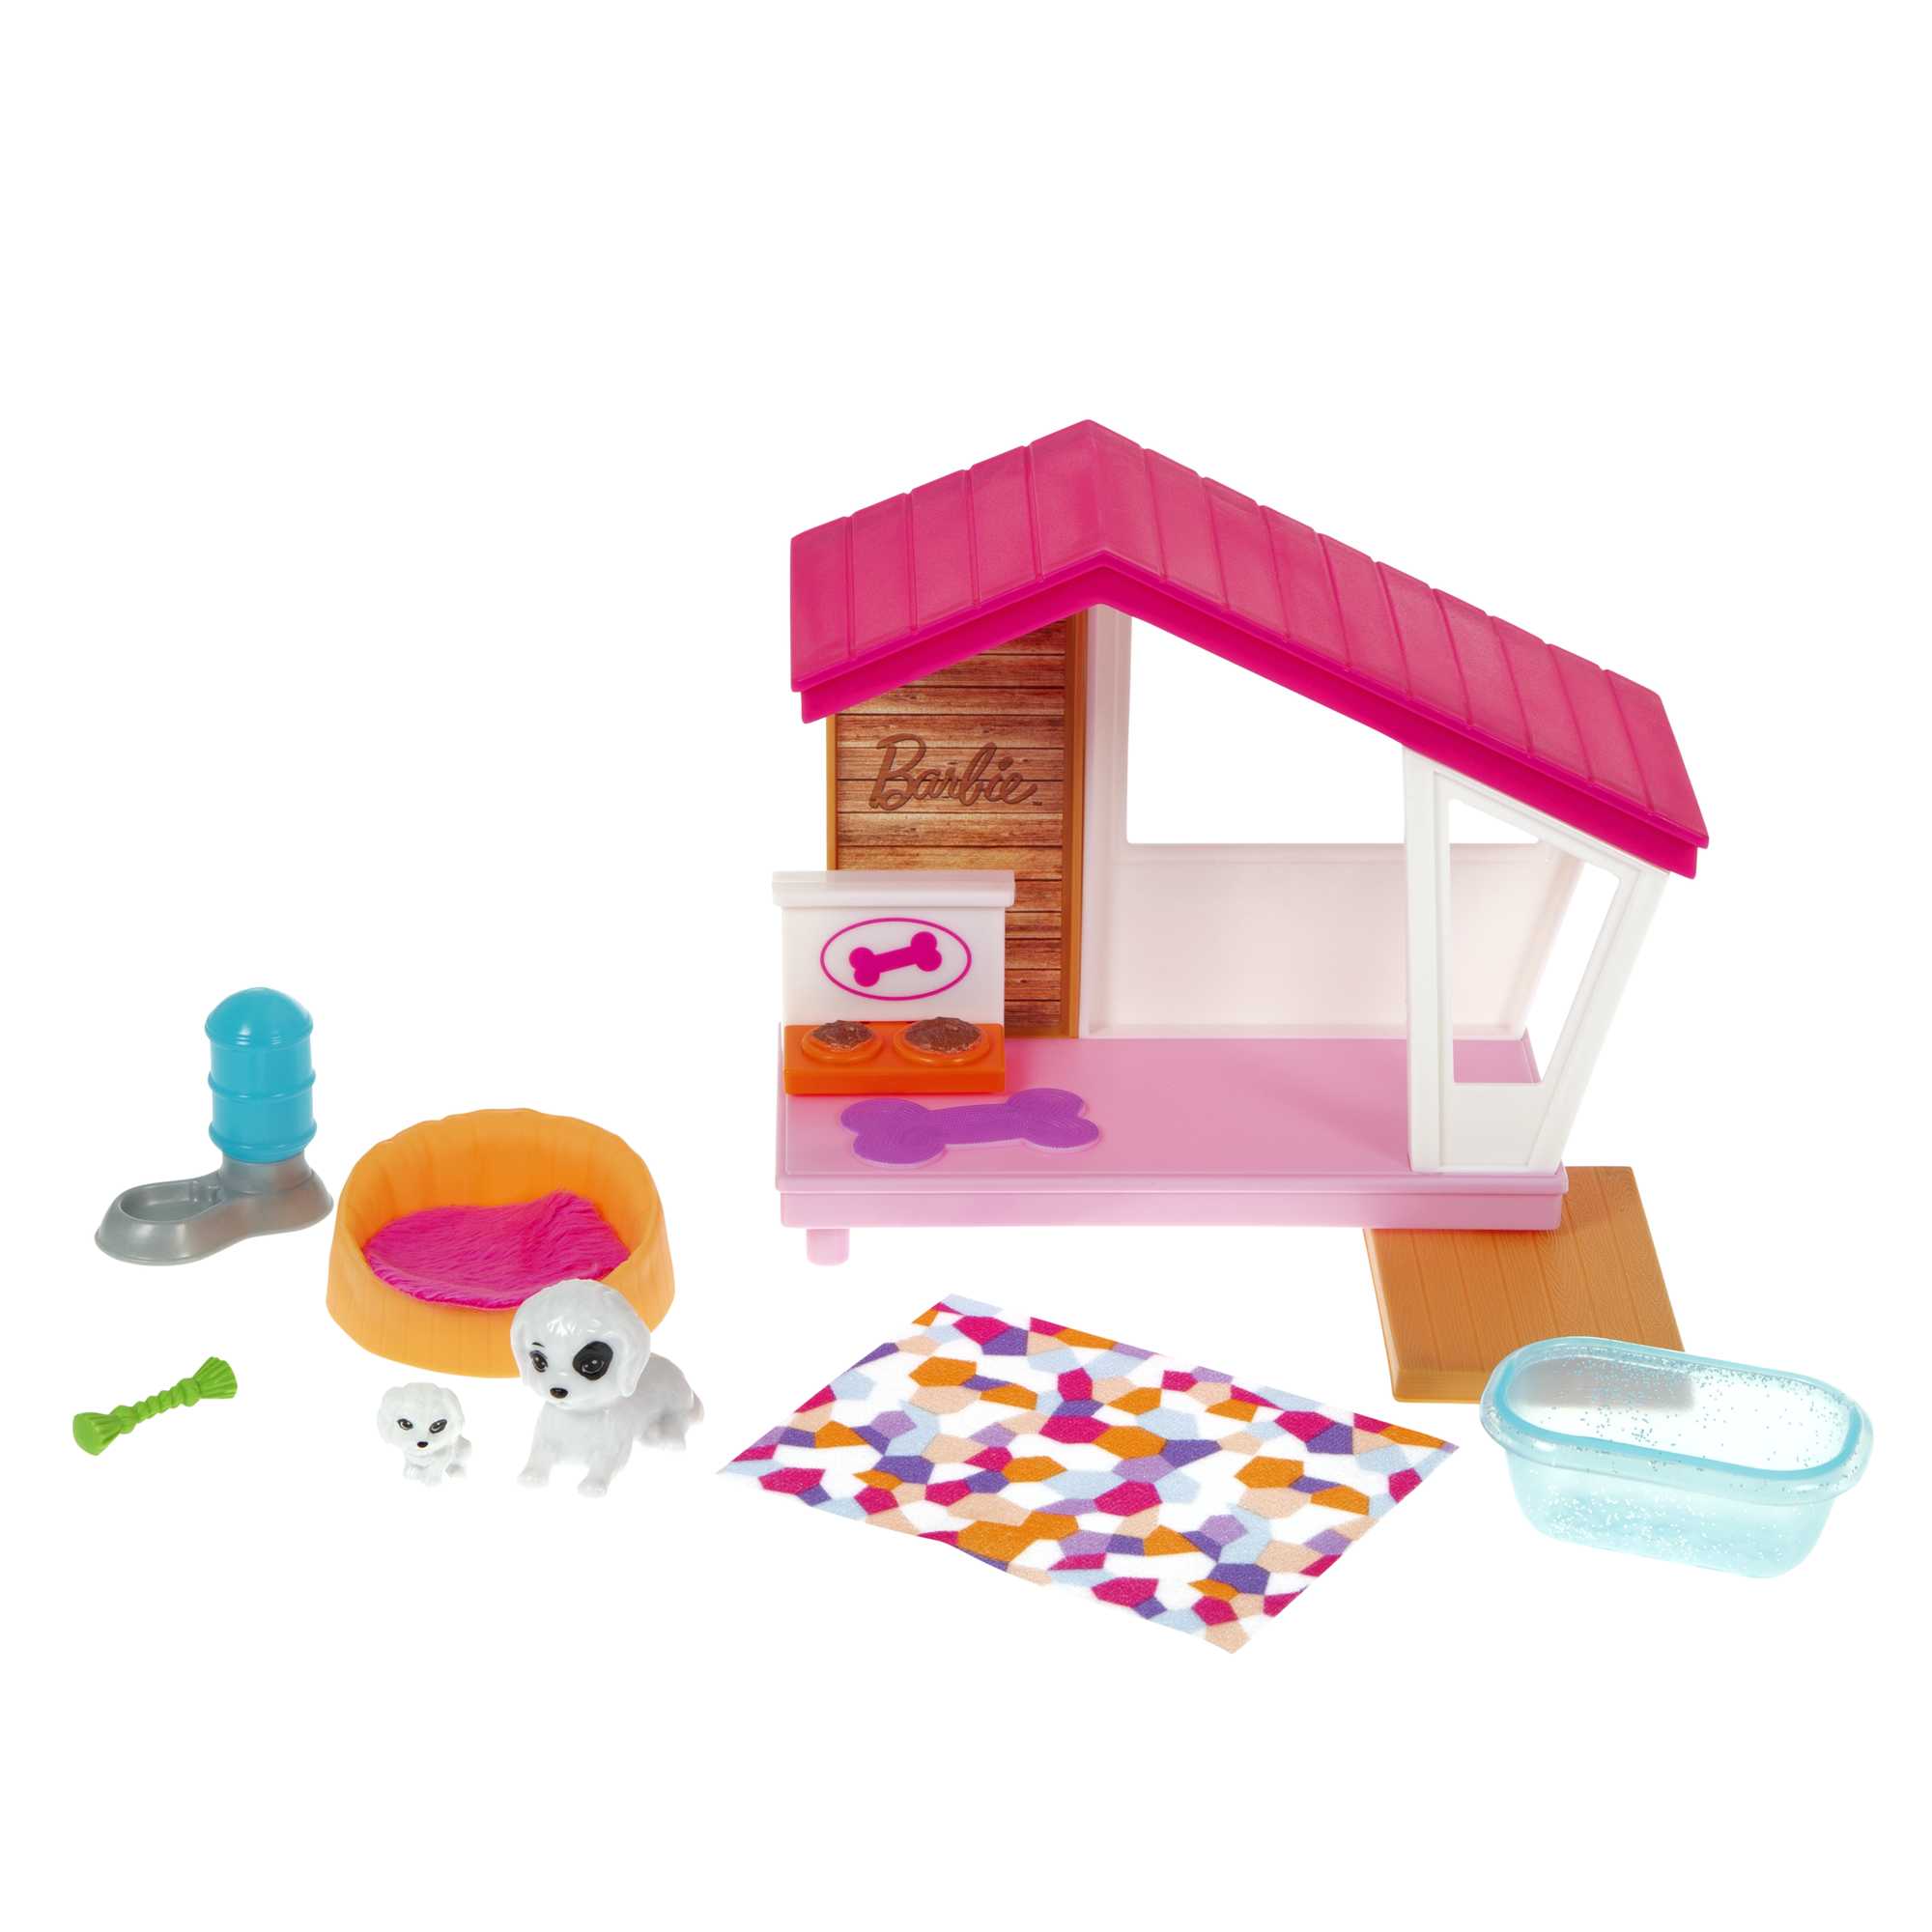 Barbie Mini Playset With 2 Pet Puppies GRG78 | Mattel